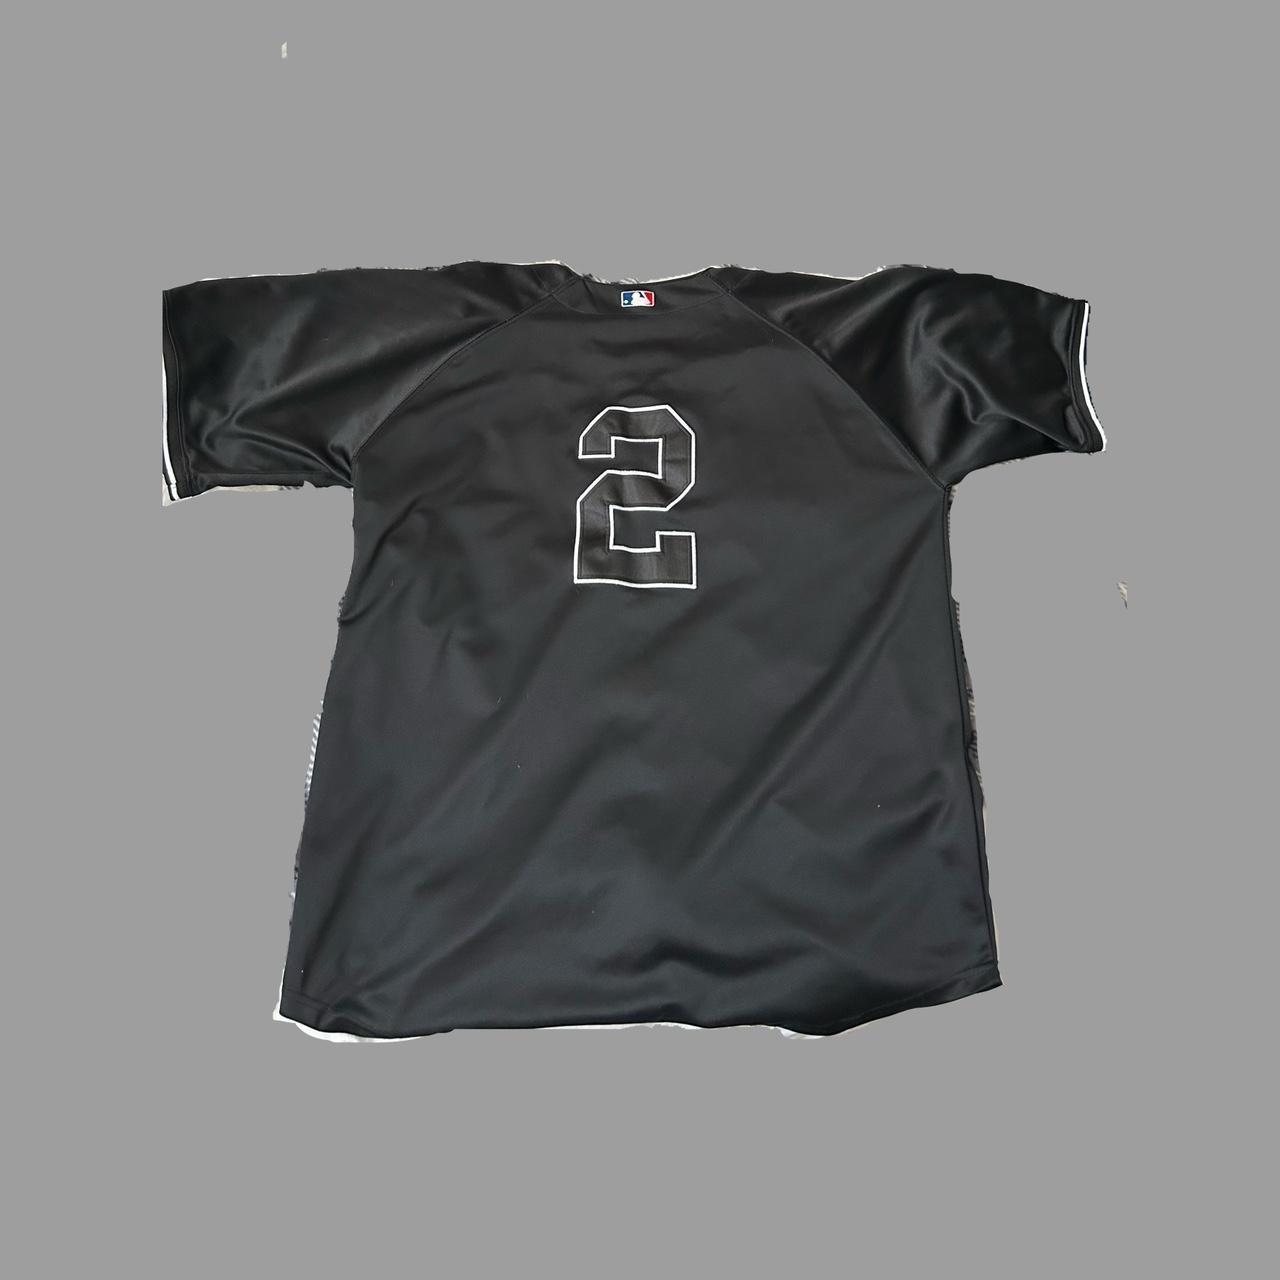 Vintage New York Yankees Derek Jeter jersey - Depop